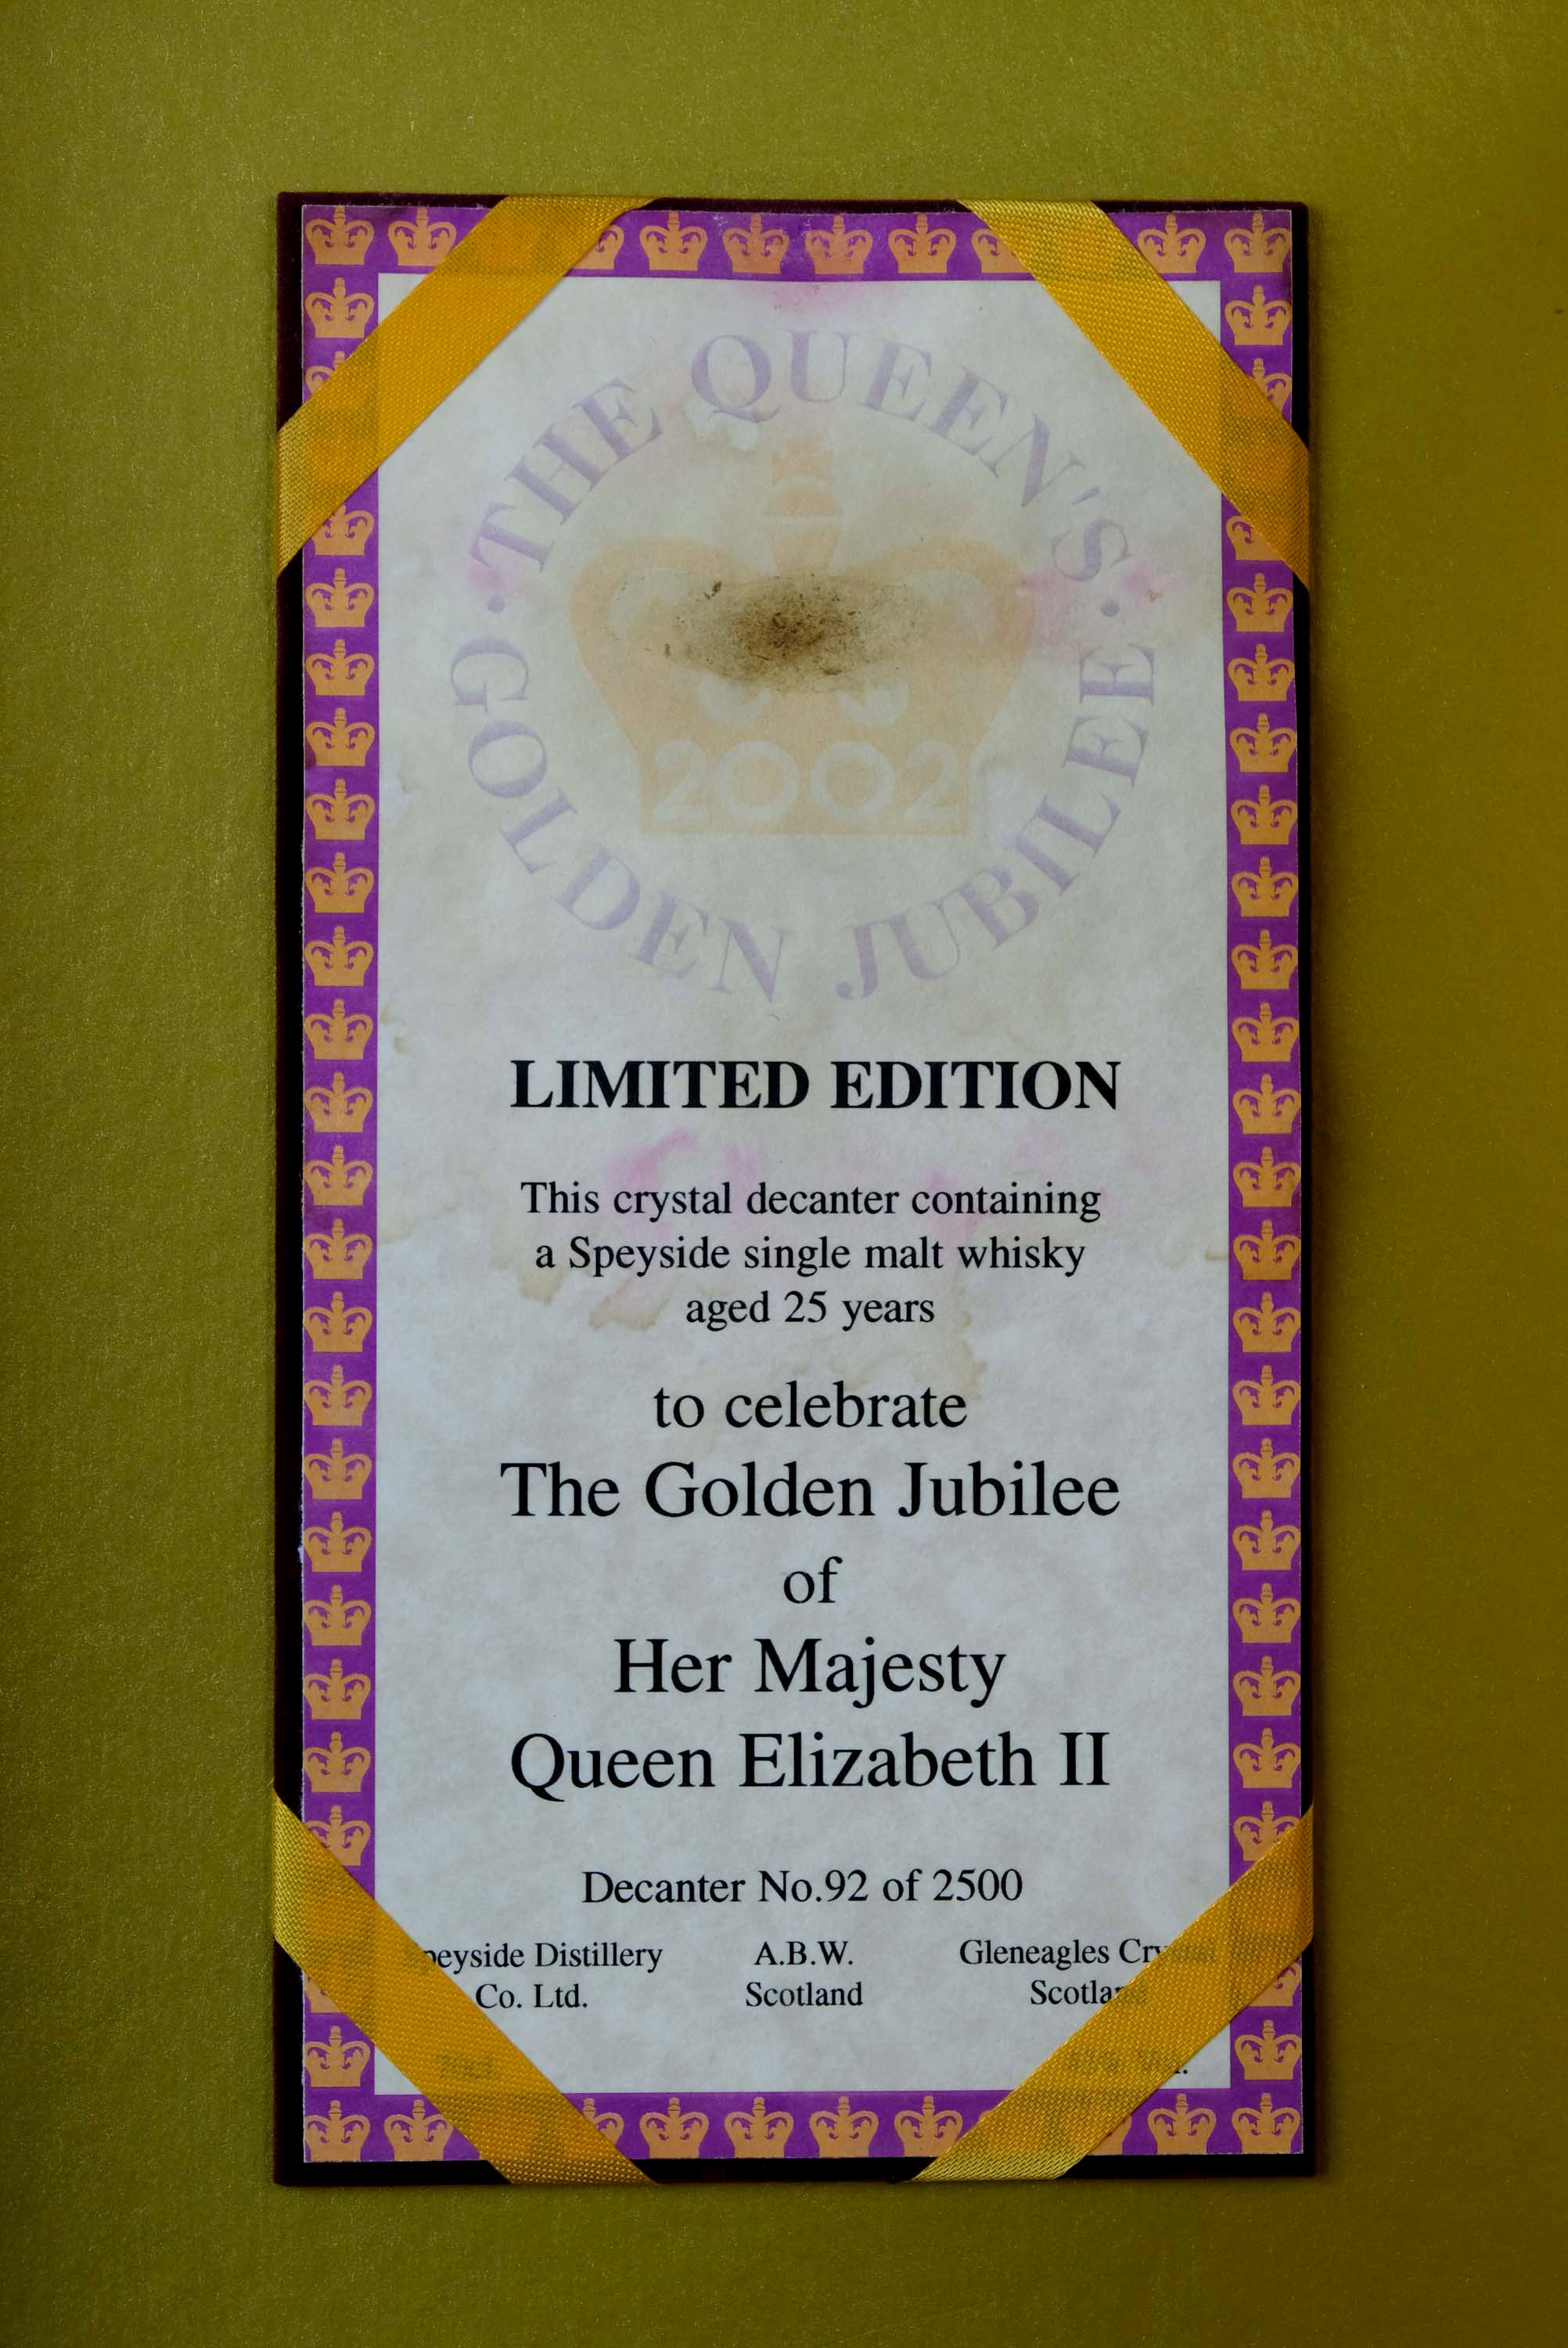 To Commemorate The Golden Jubilee Of Her Majesty Queen Elizabeth 1952-2002